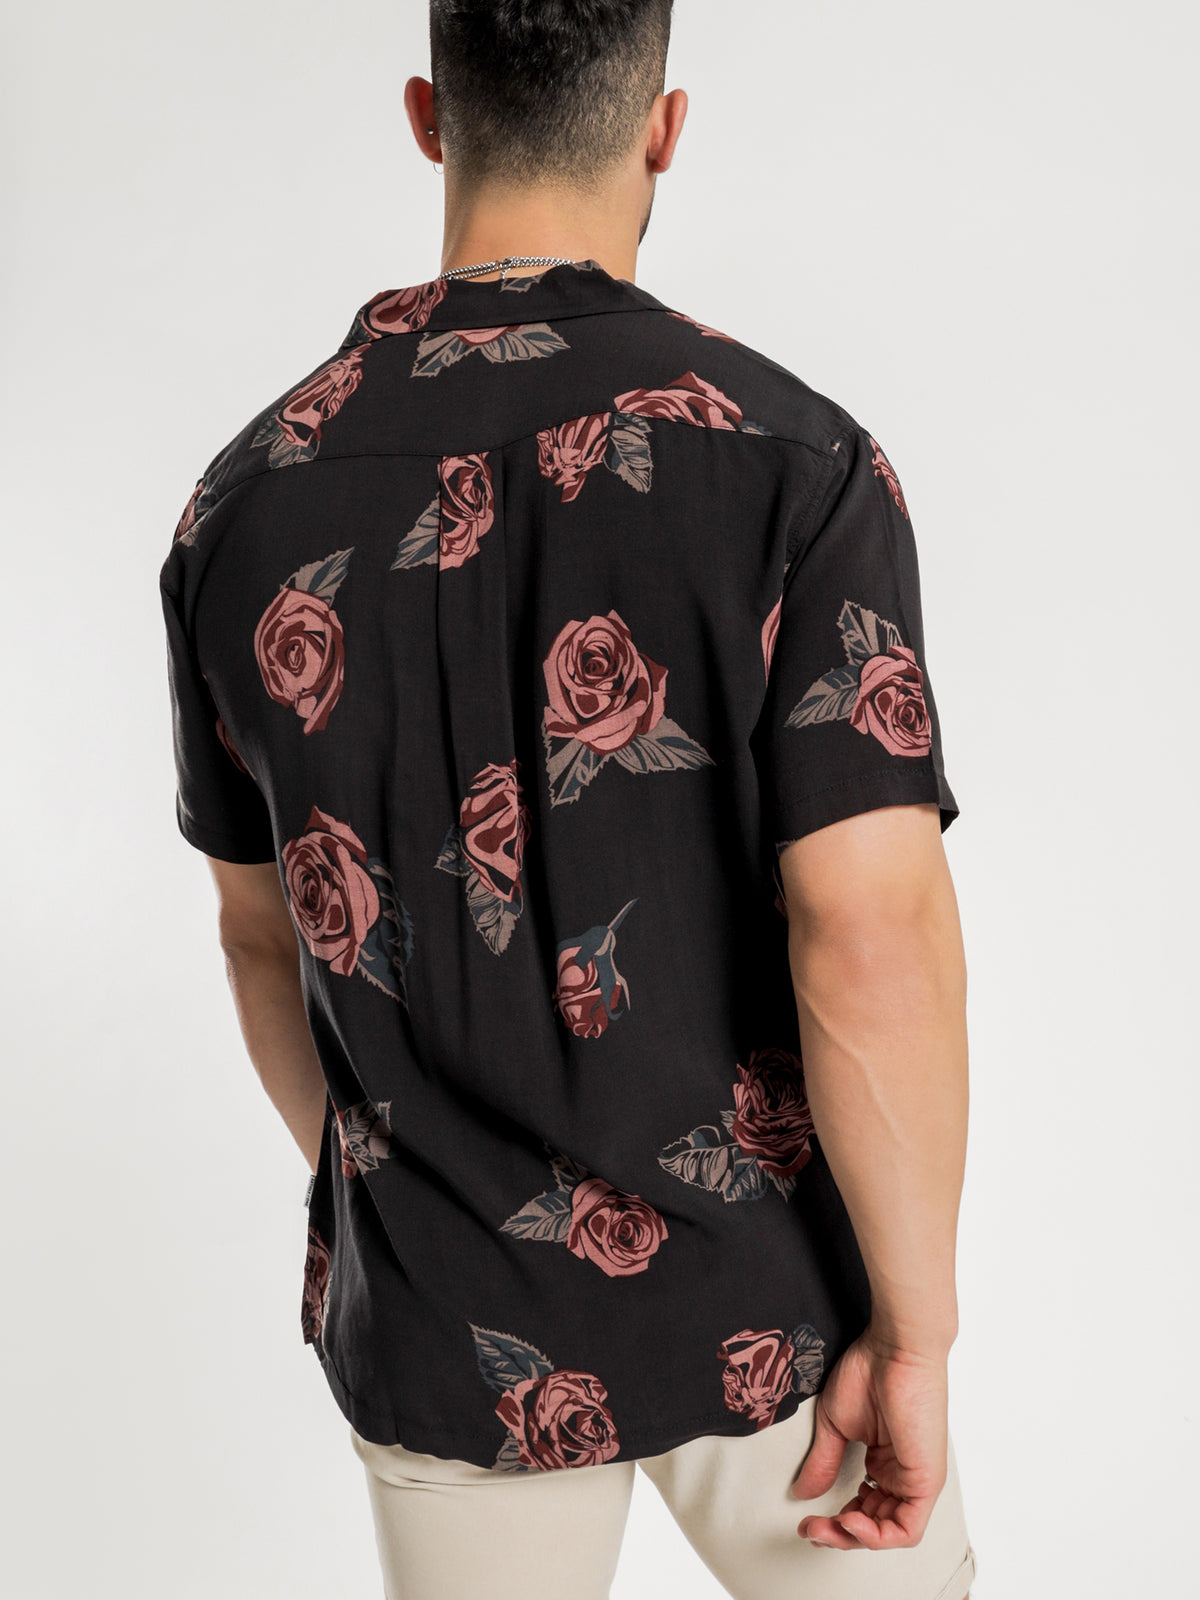 Roses Short Sleeve Shirt in Black